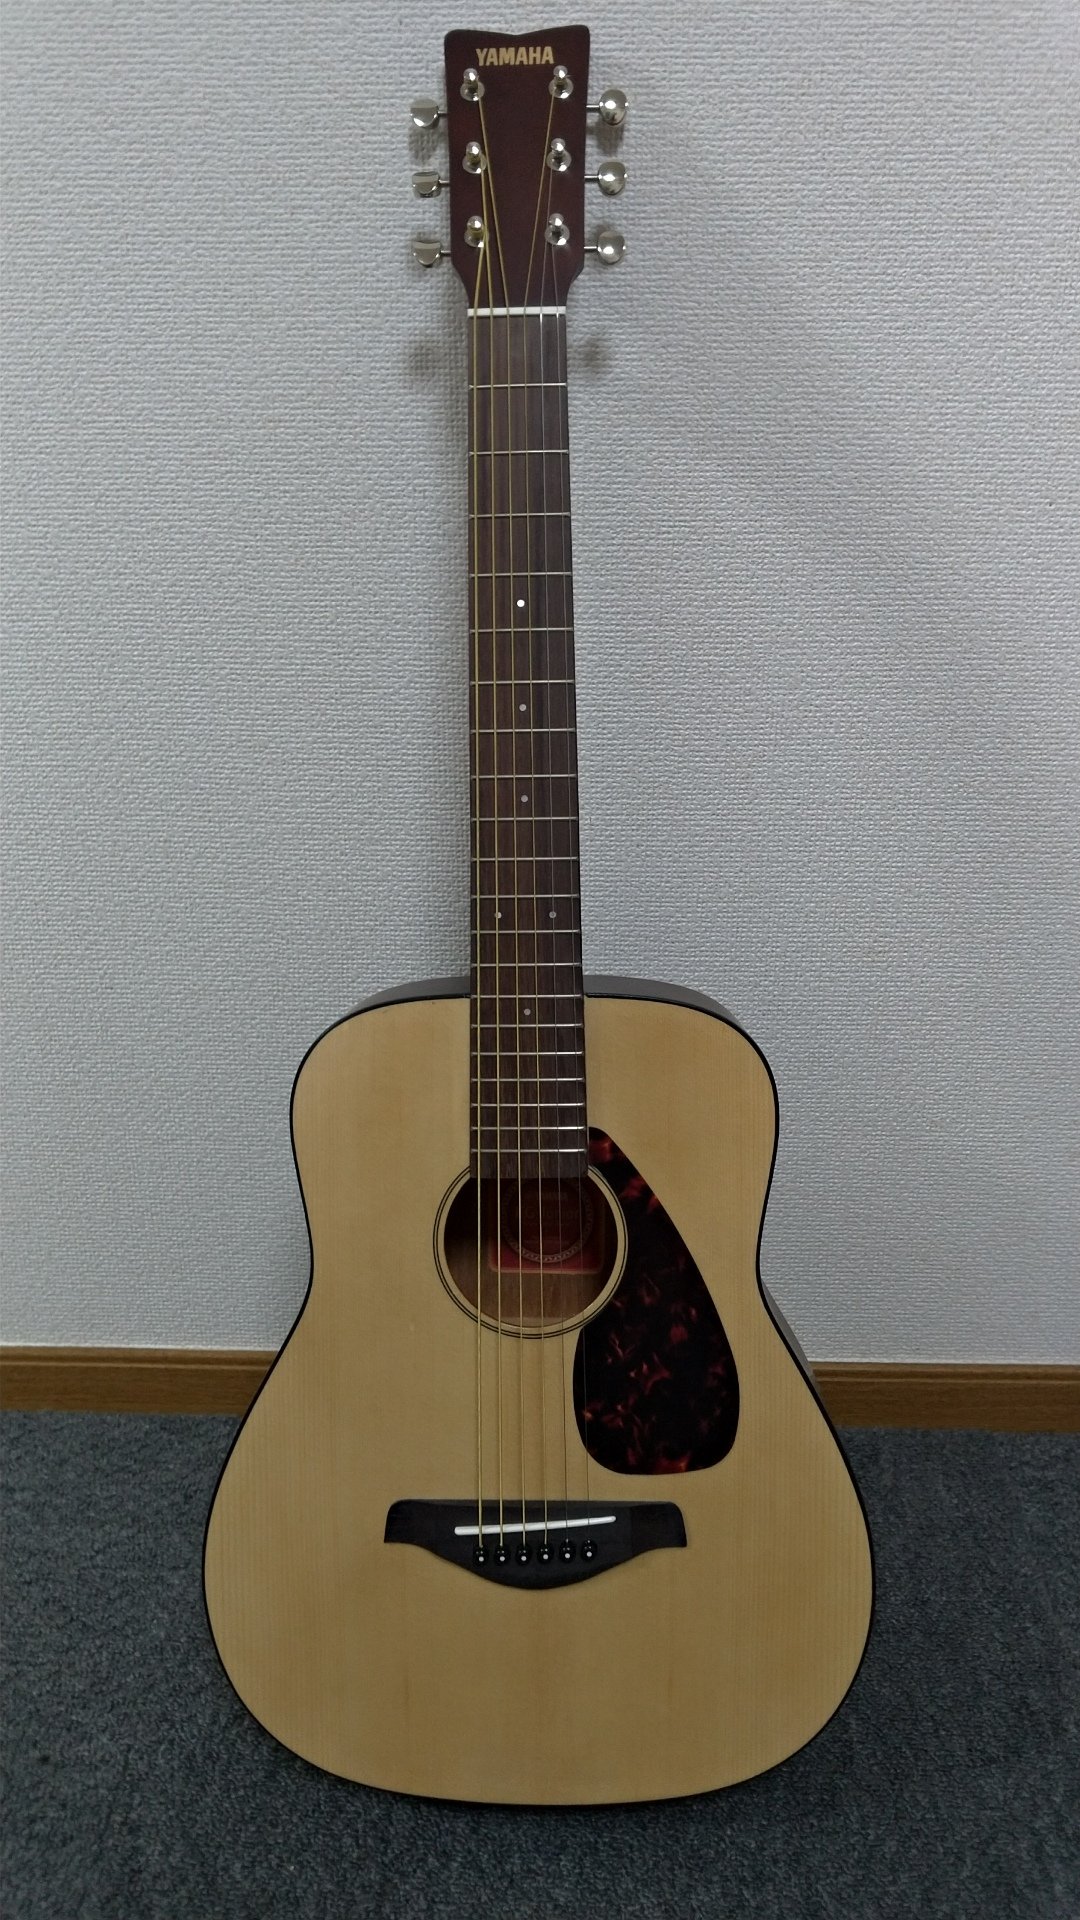 YAMAHAミニギターJR-2を買った感想レビュー【小型なのに本格的】